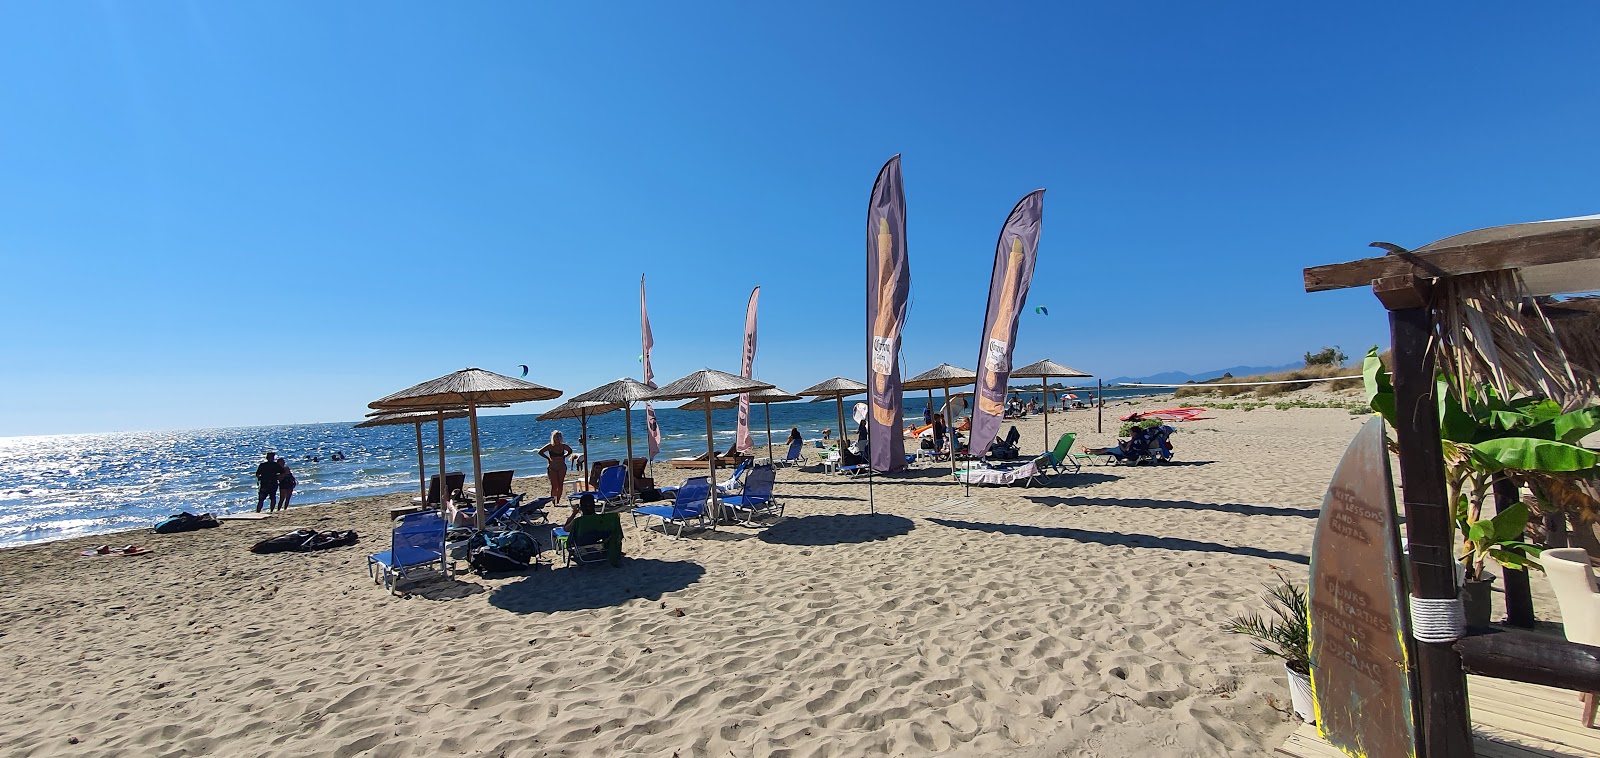 Foto af Agios Nikolaos 2nd beach - populært sted blandt afslapningskendere